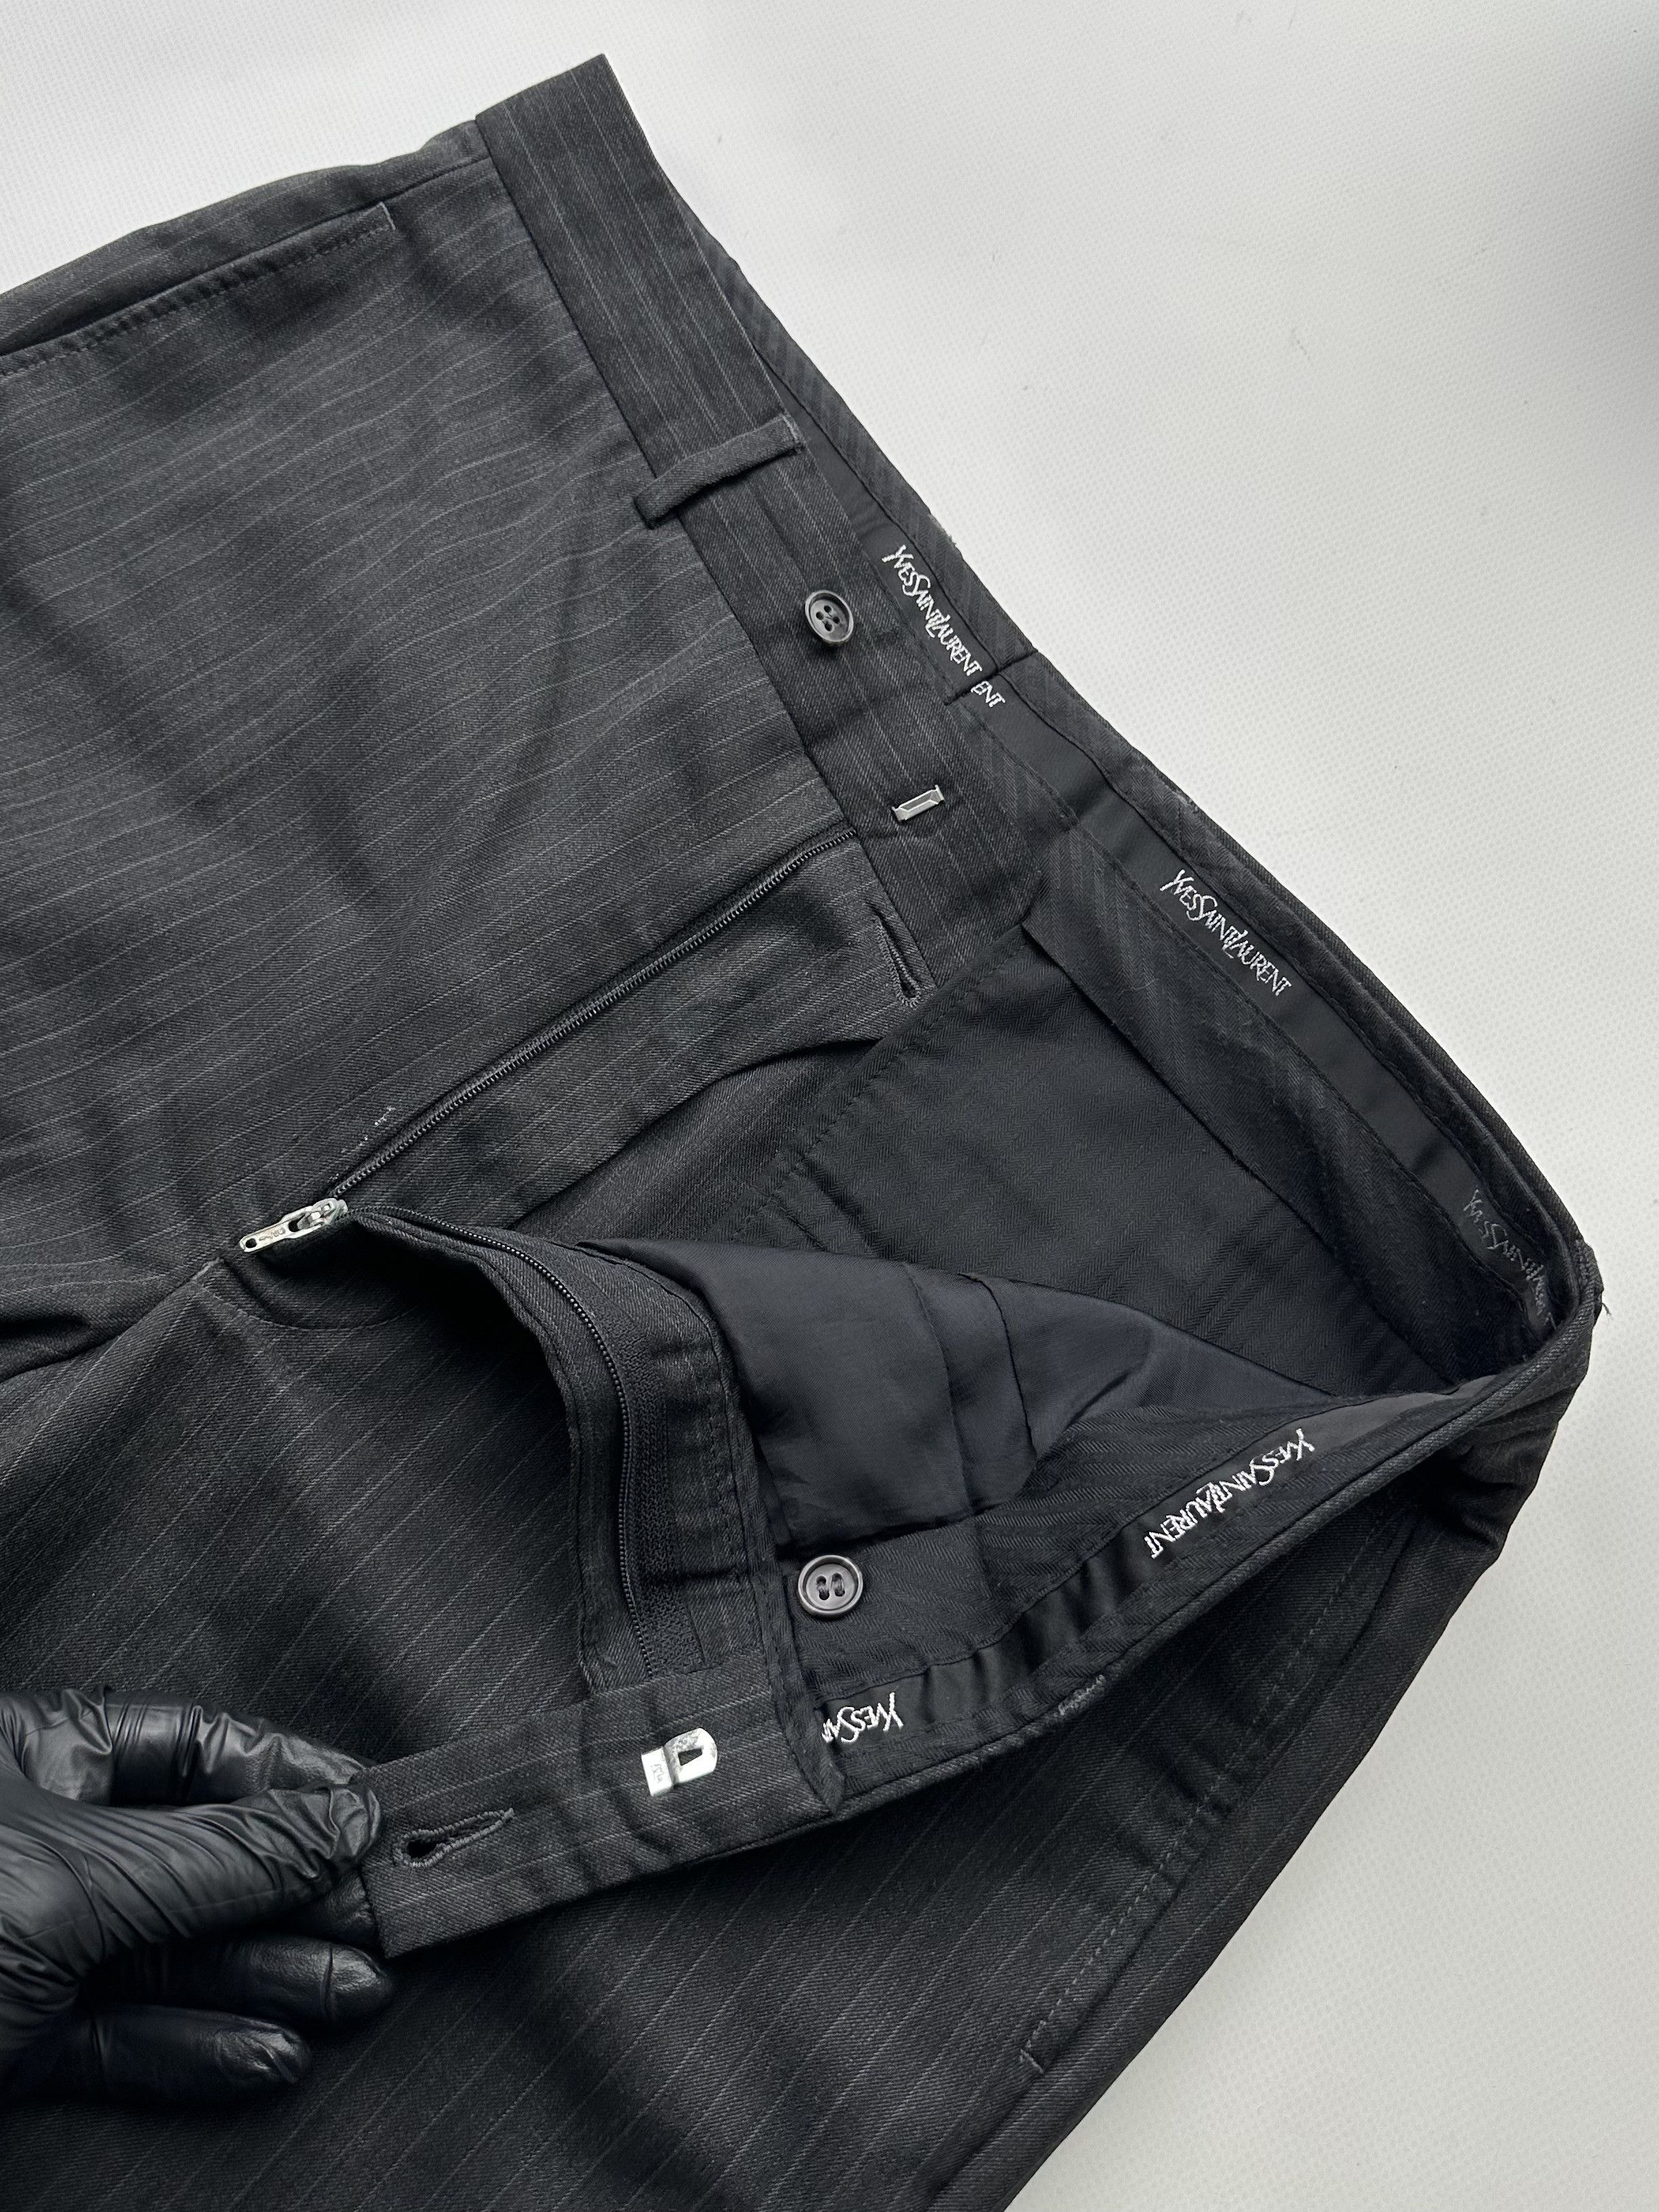 Vintage Yves Saint Laurent Vintage Wool Striped Pants Size US 34 / EU 50 - 7 Thumbnail